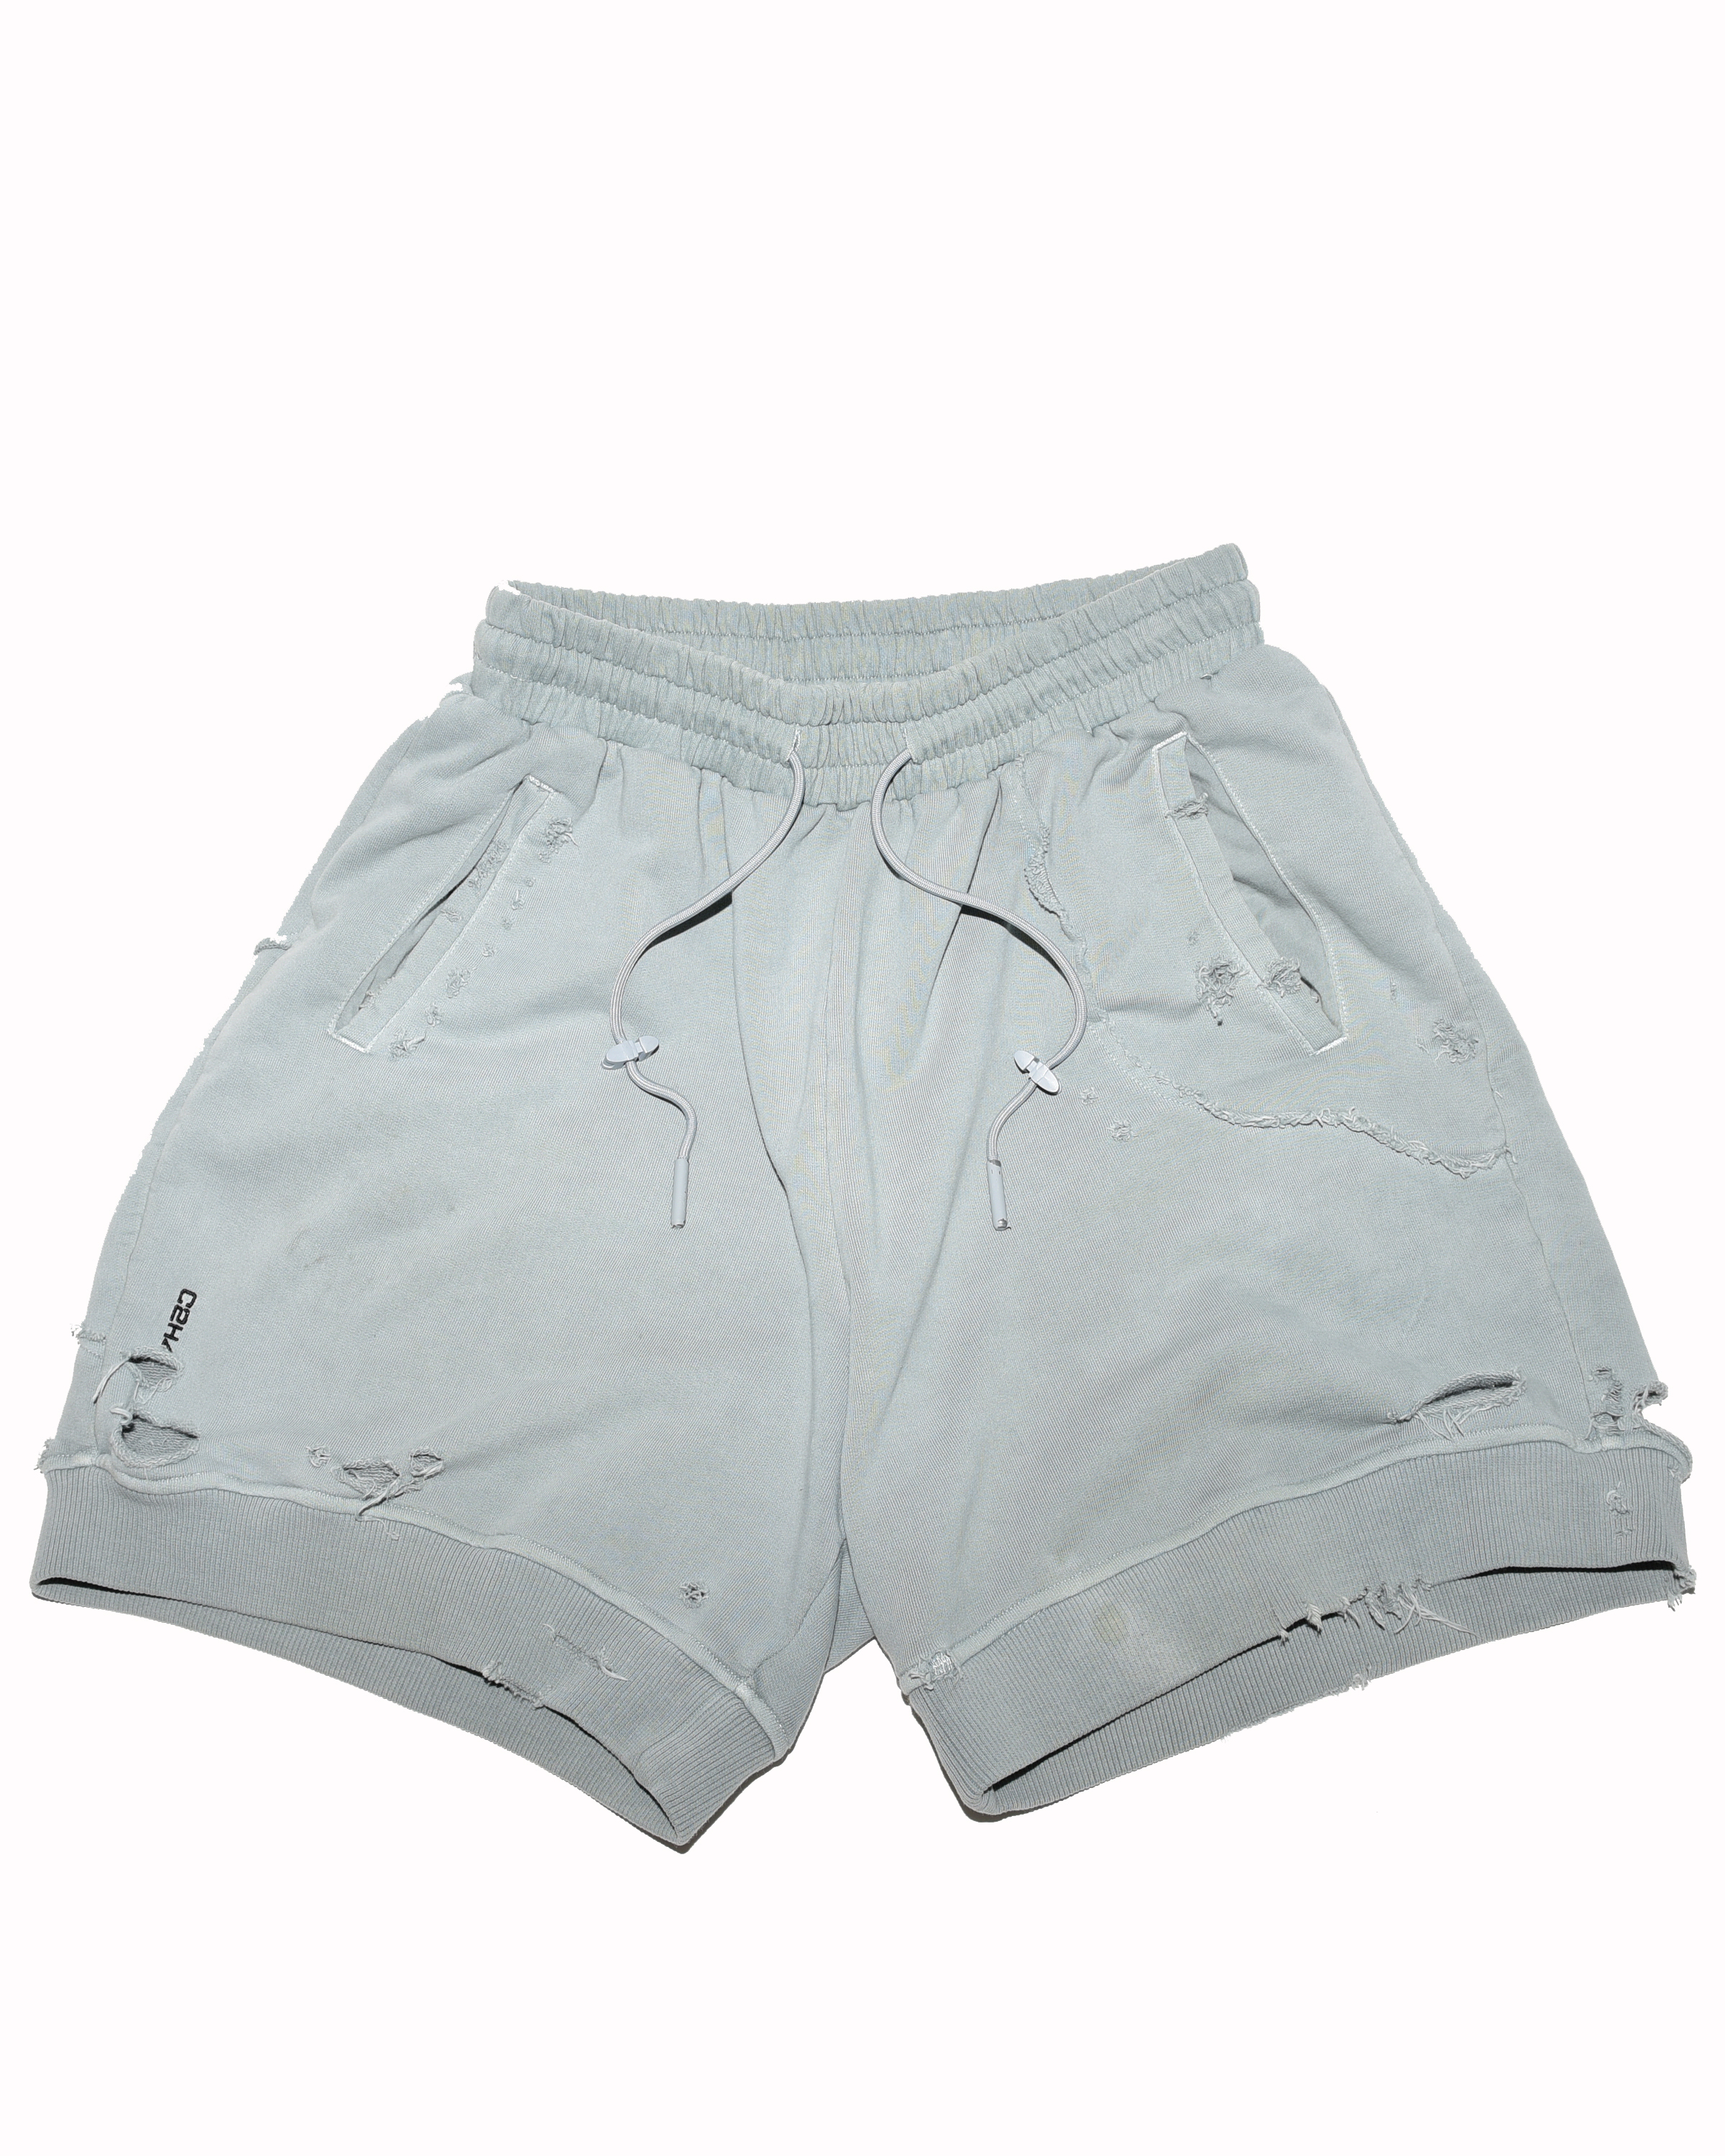 C2H4 Distressed Sweat Shorts - 1